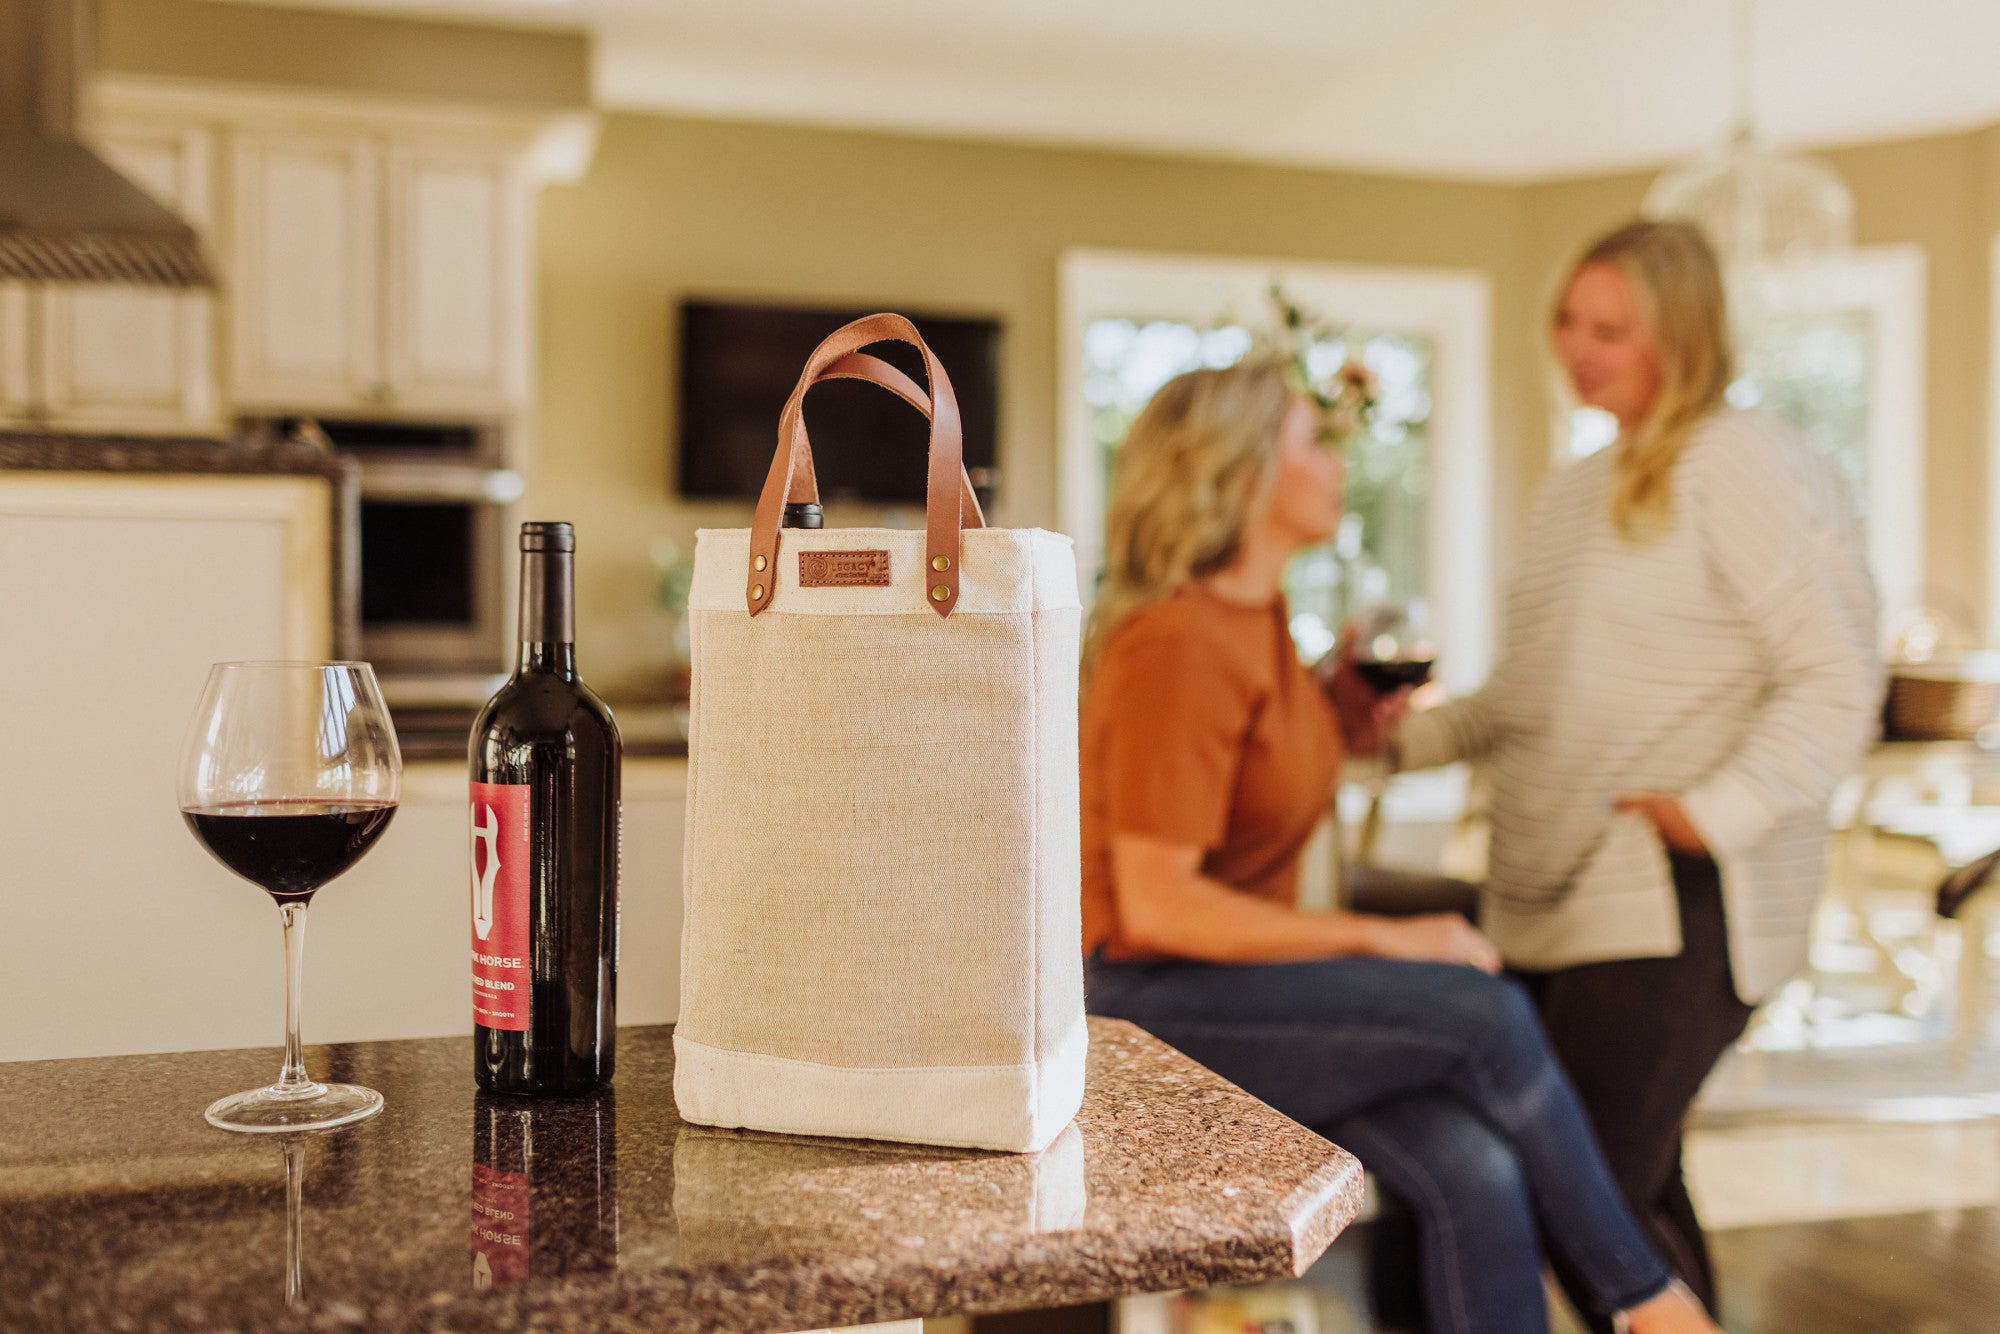 San Jose Sharks - Pinot Jute 2 Bottle Insulated Wine Bag